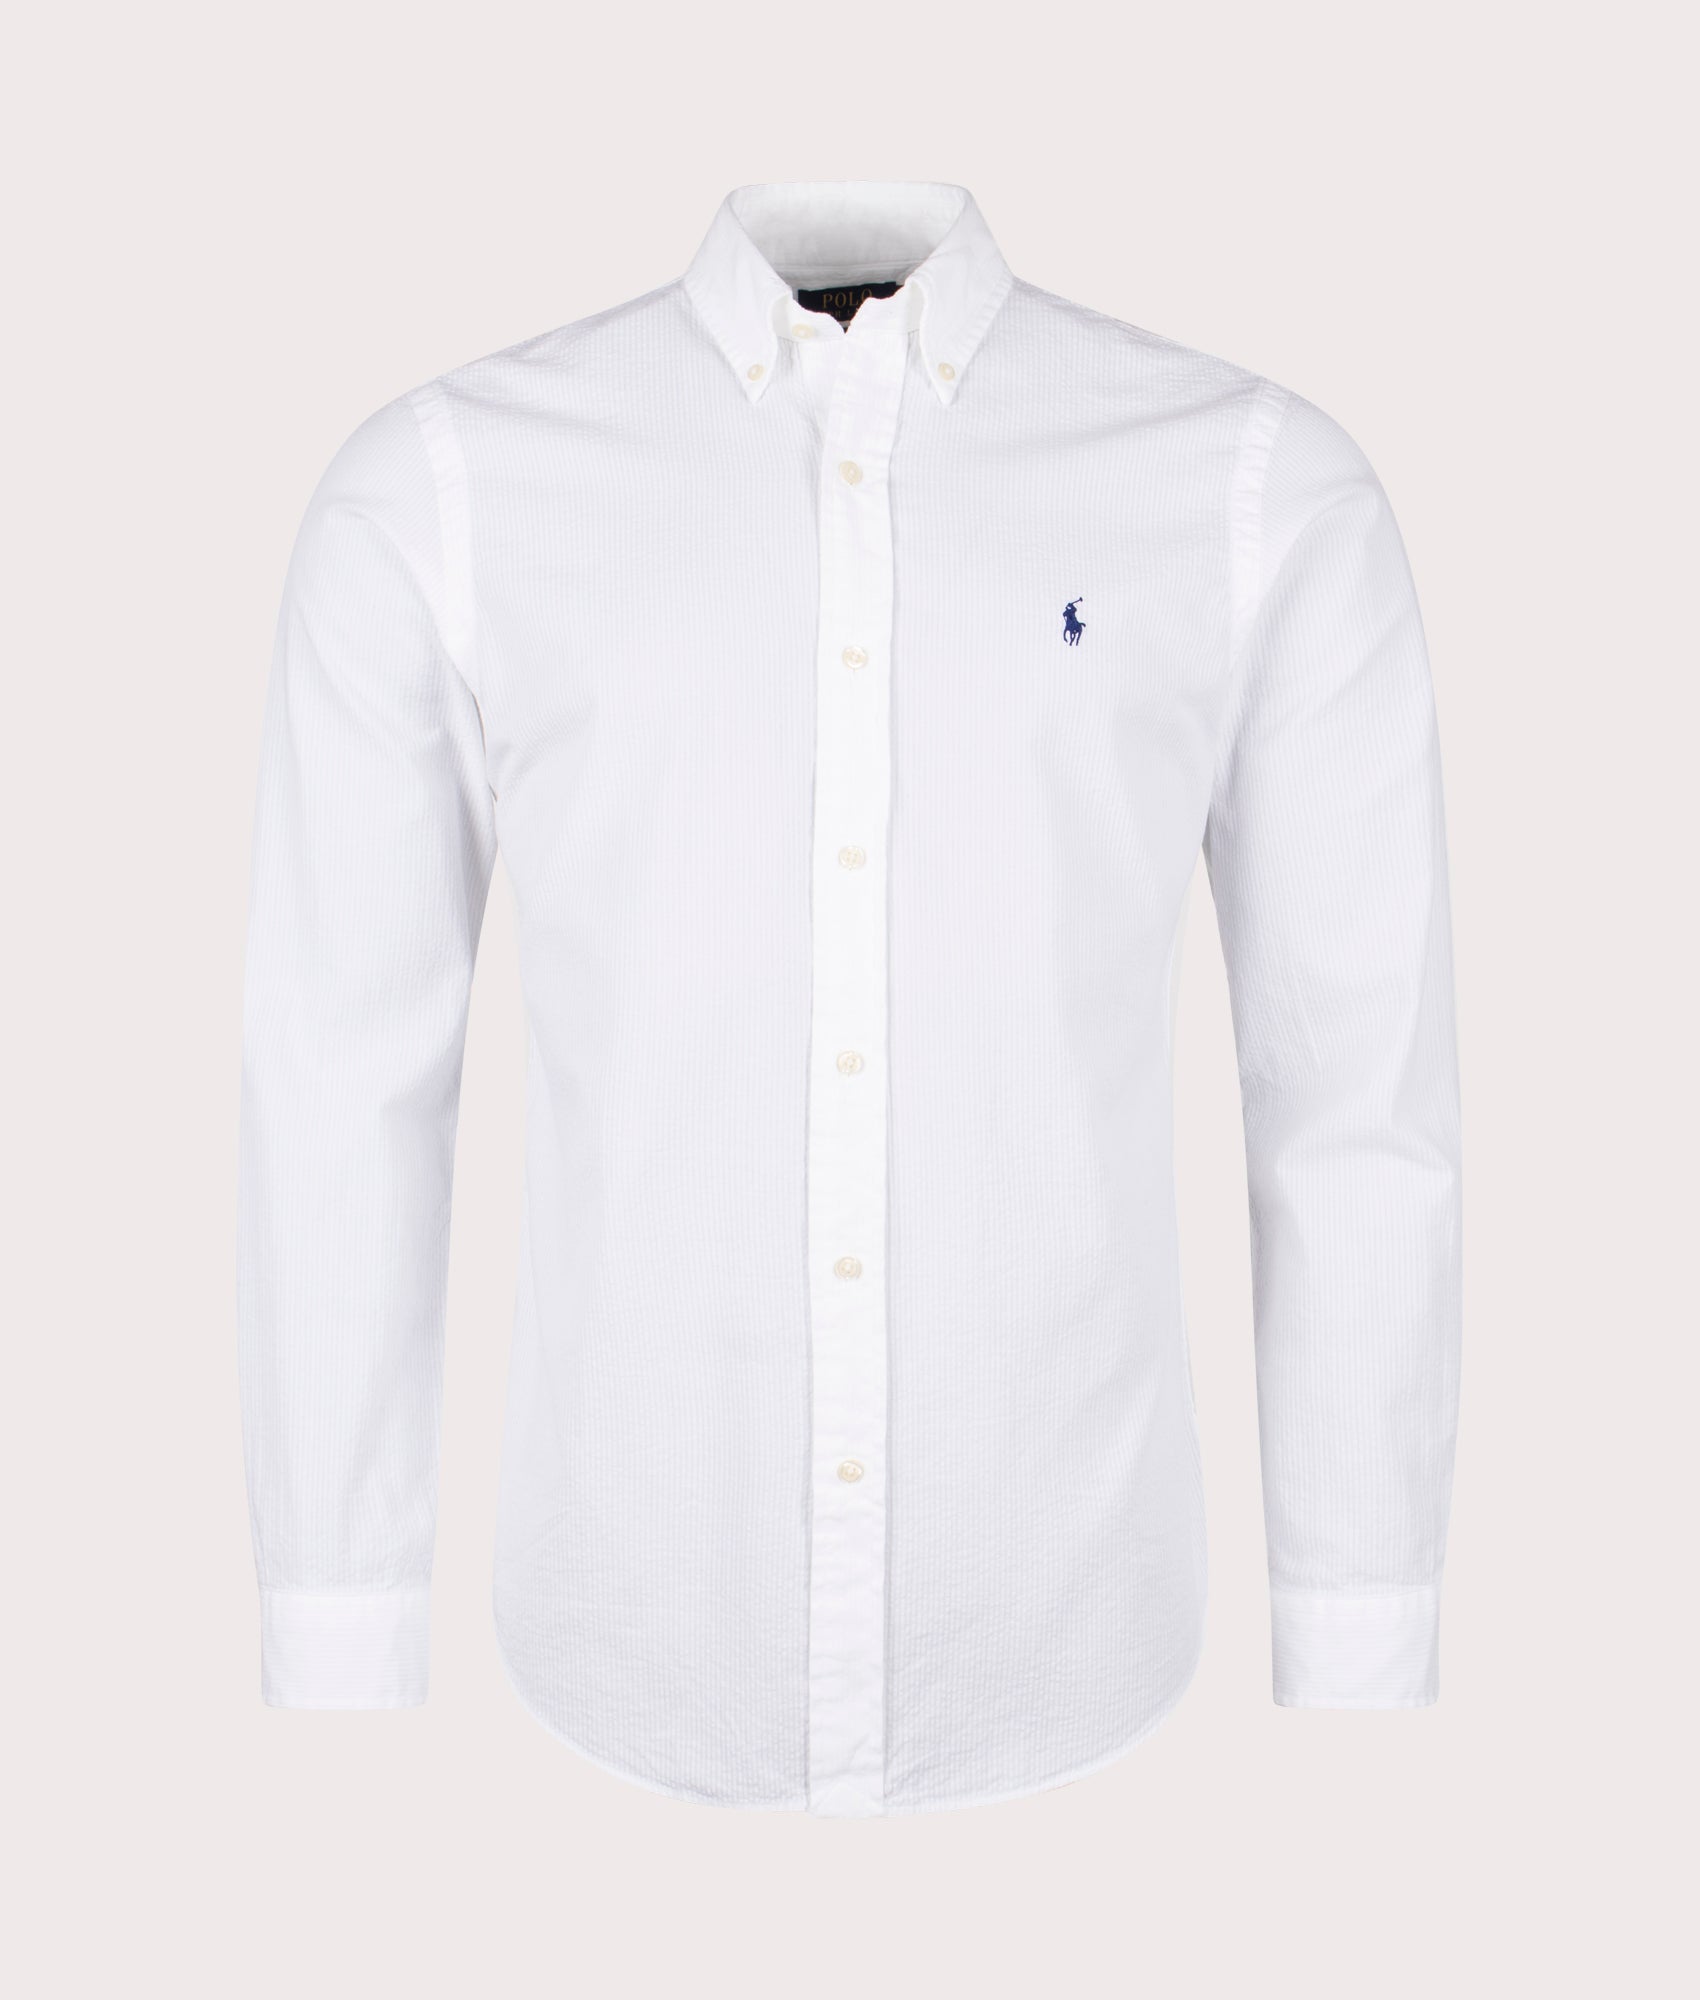 Polo Ralph Lauren Mens Custom Fit Lightweight Sport Shirt - Colour: 001 White - Size: Large